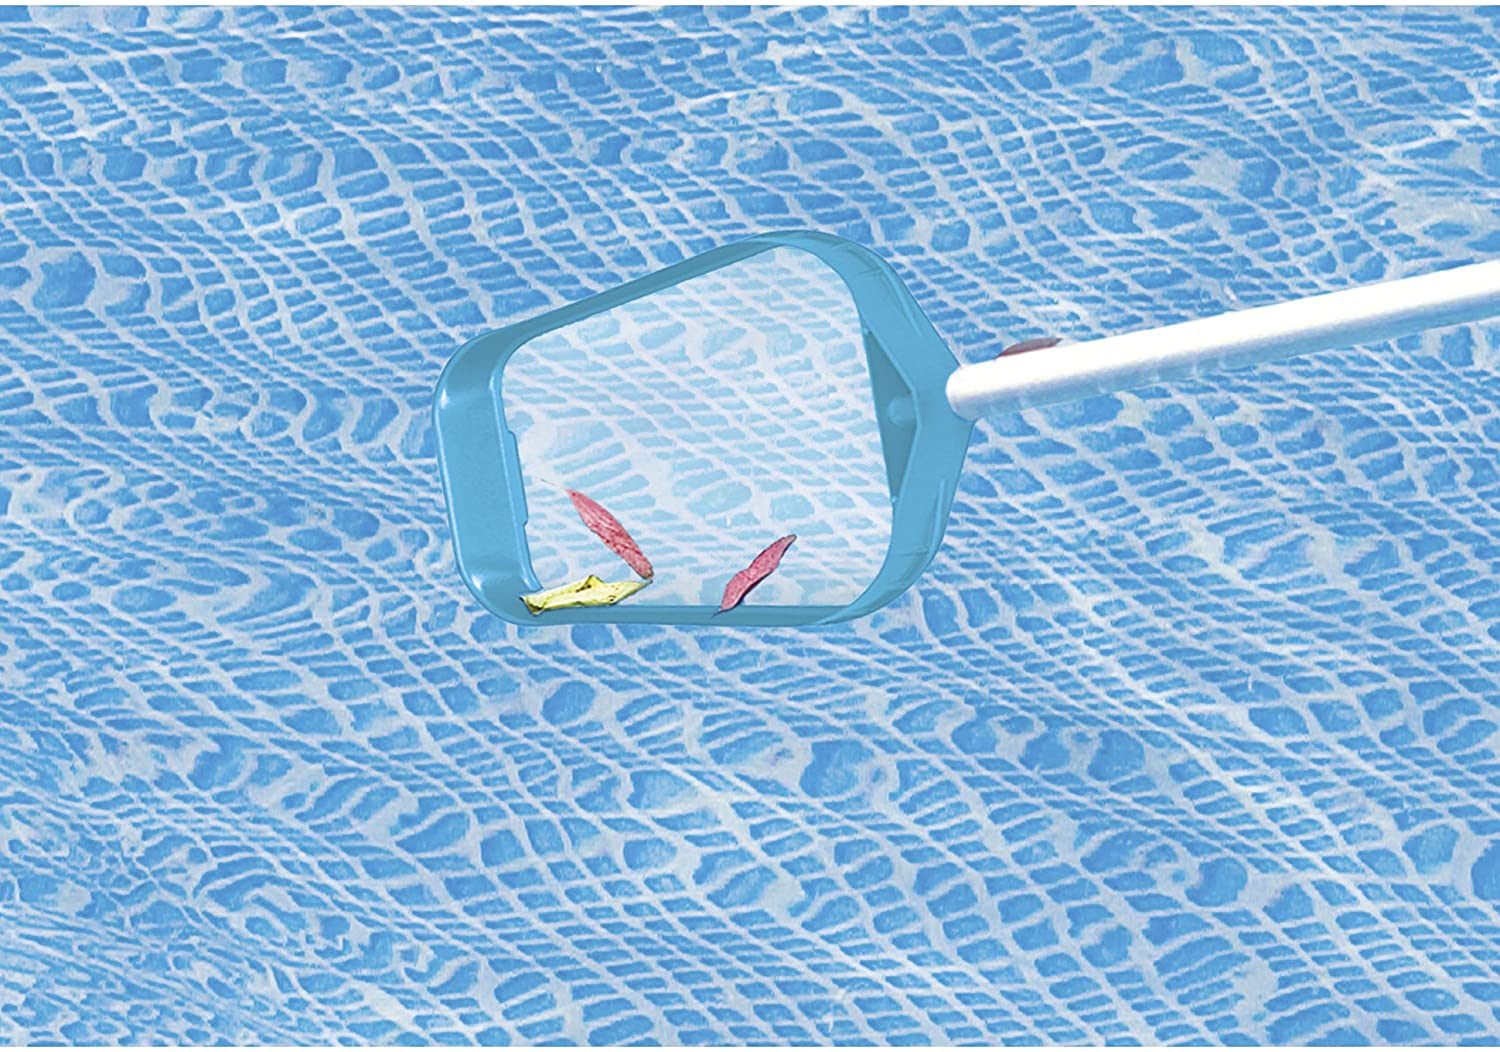 Intex Swimming Pool Maintenance Cleaning Kit - Skimmer Net and Vacuum